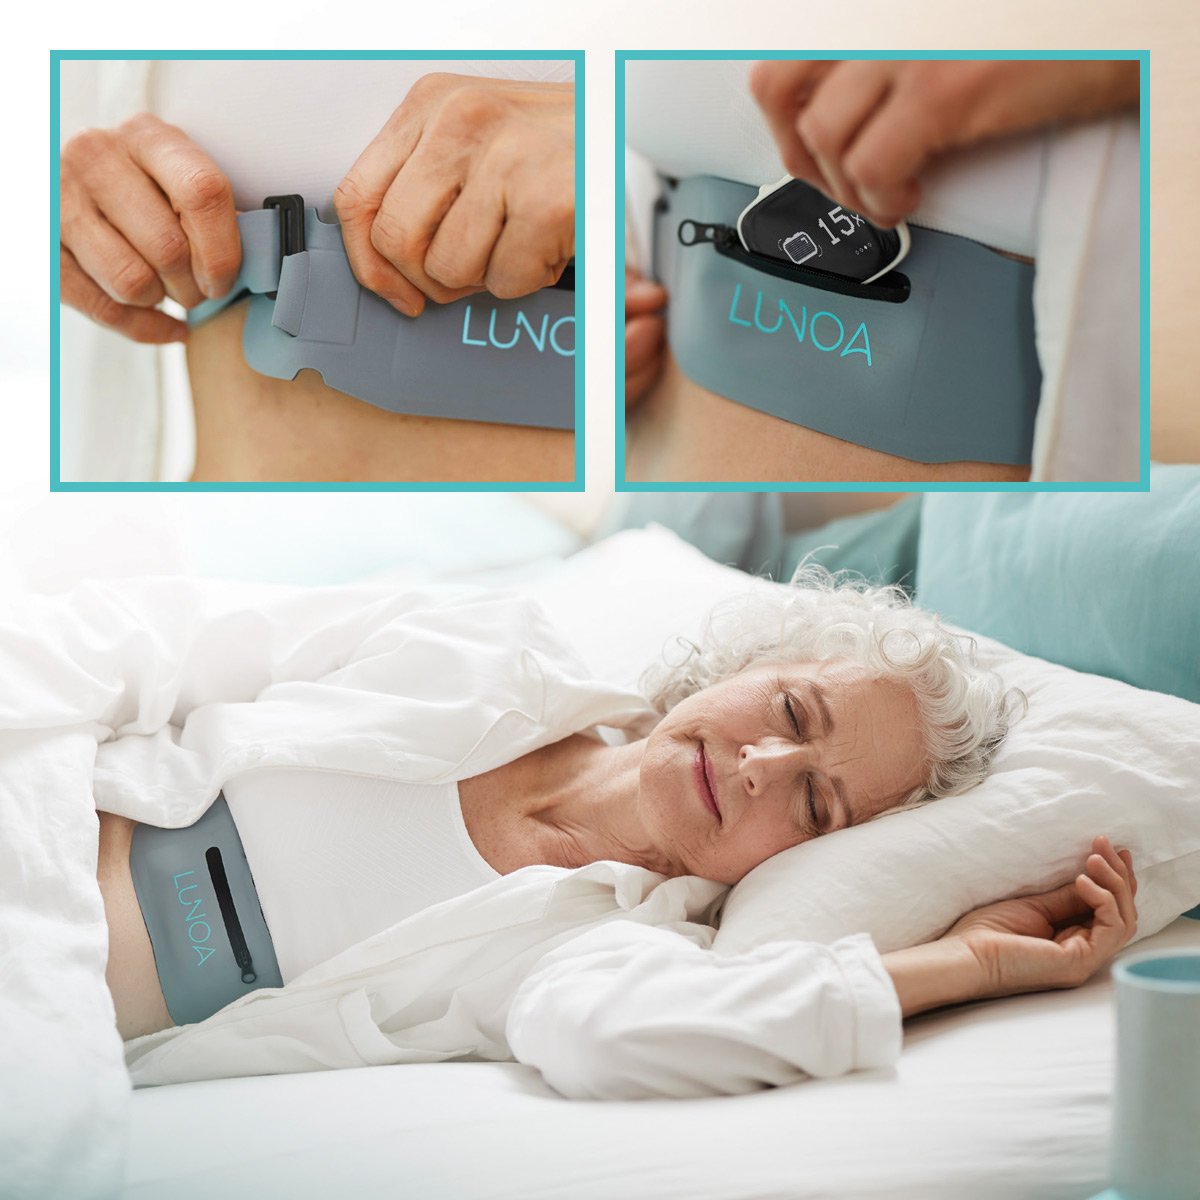 NightBalance Lunoa Positional Sleep Therapy Device